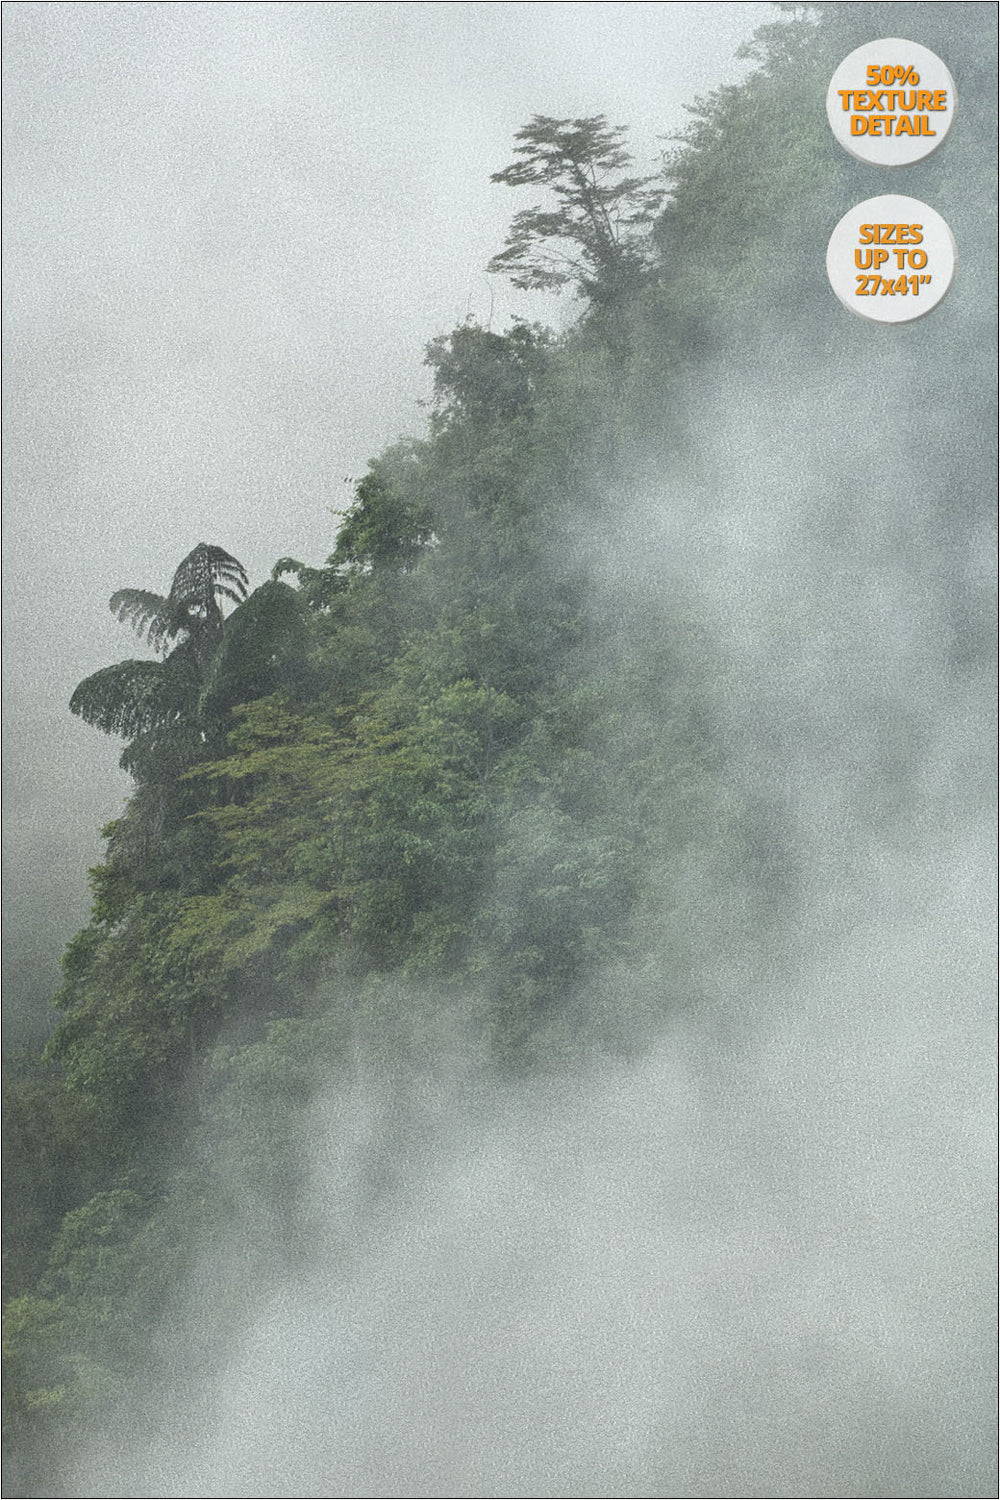 Tree in the fog, Bac Ha, Vietnam. | 50% Print Detail.